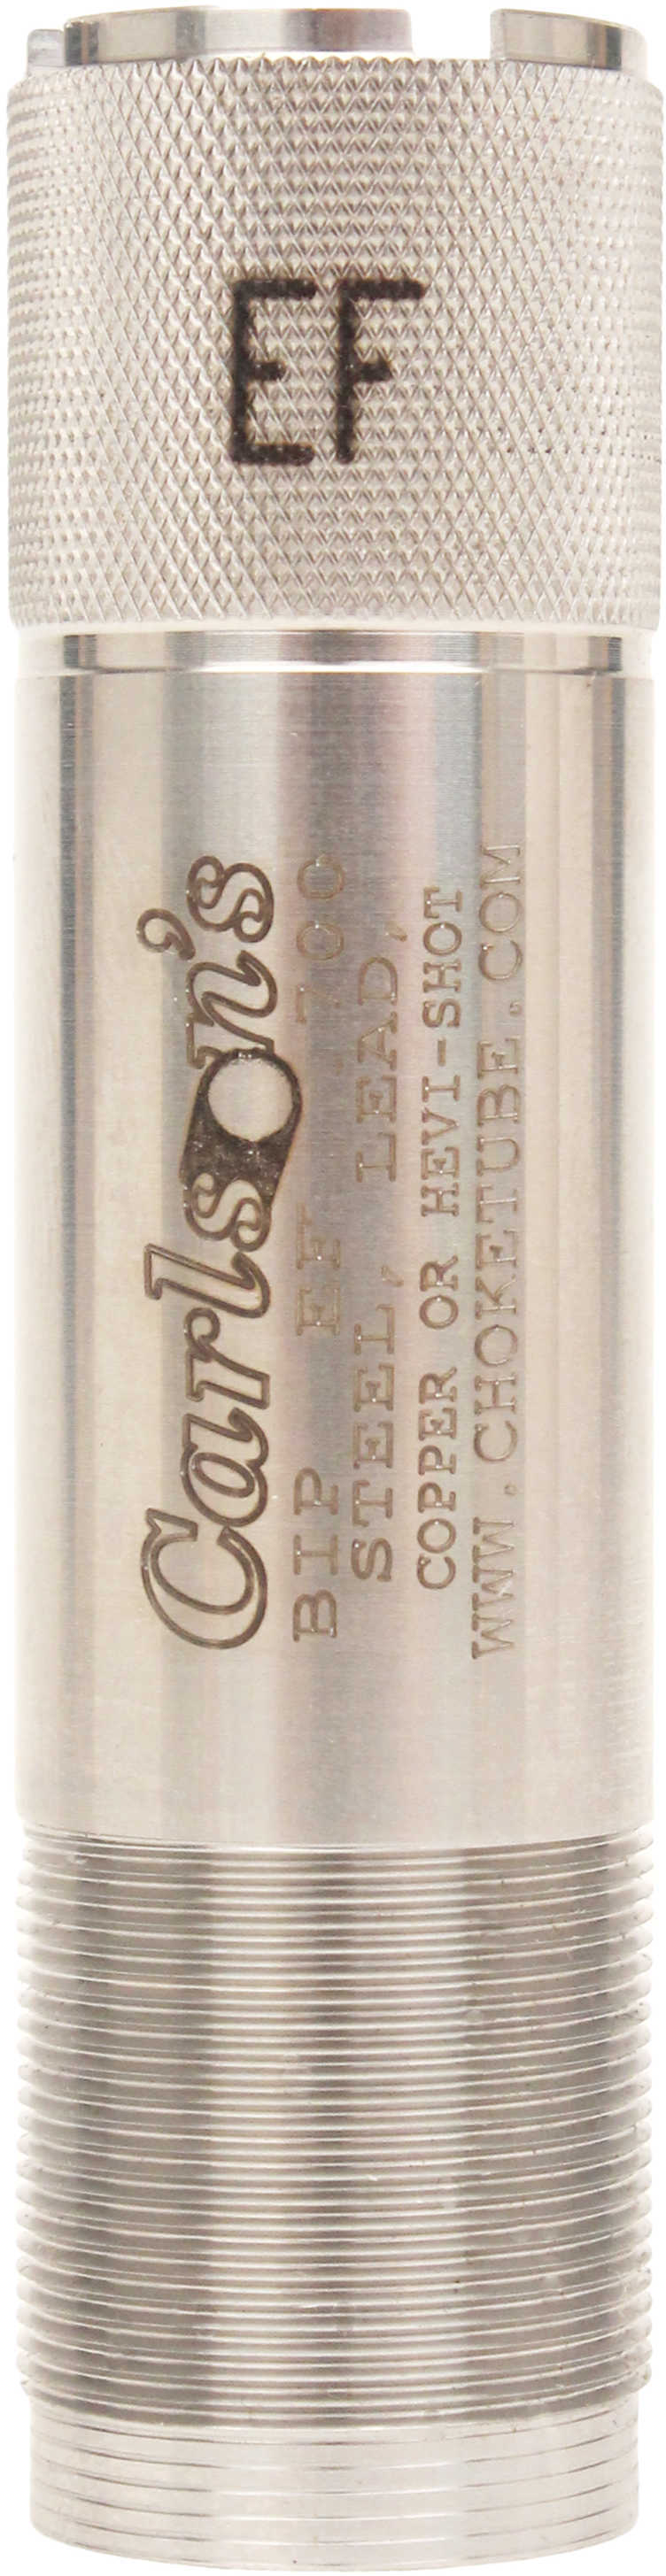 Carlsons Browning Inv+ Choke Tubes Sporting Clays, 12 Gauge, X Full .700 18868